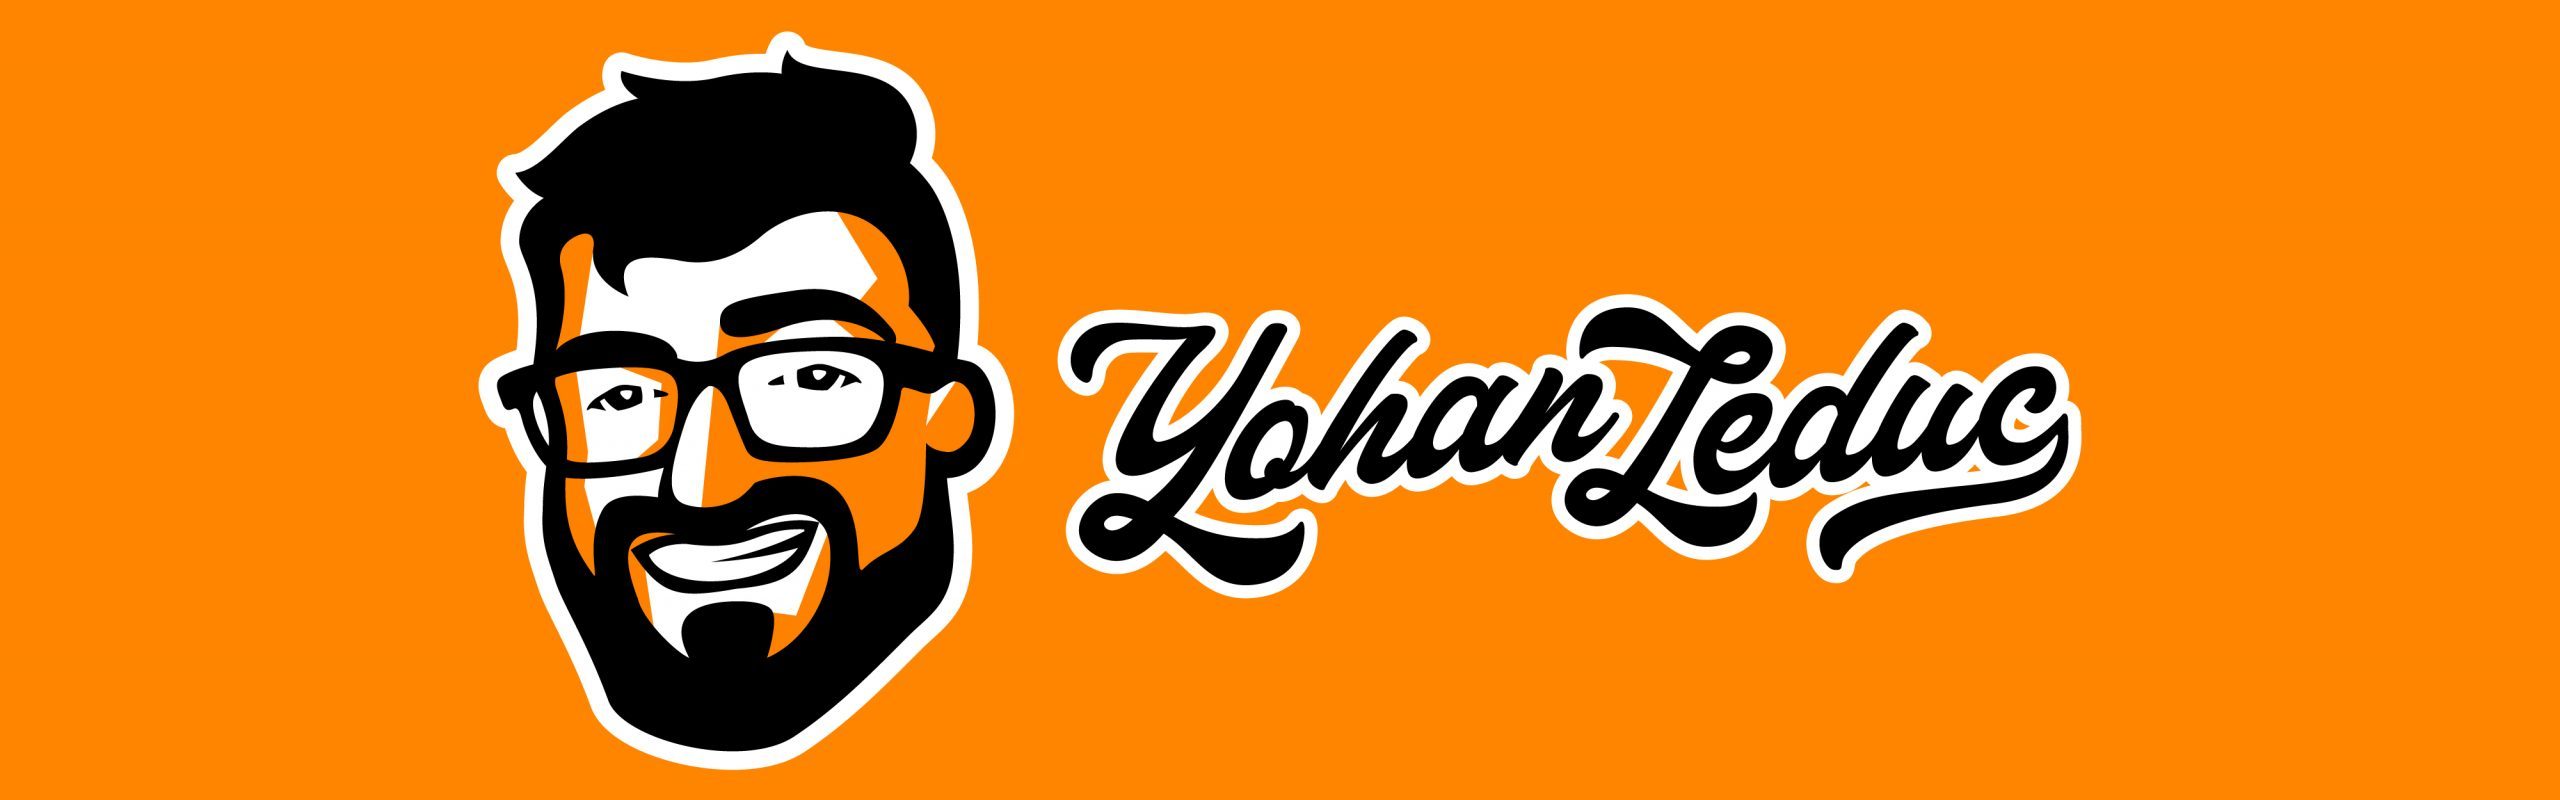 YohanLeduc_Logo_ColorsBG-37